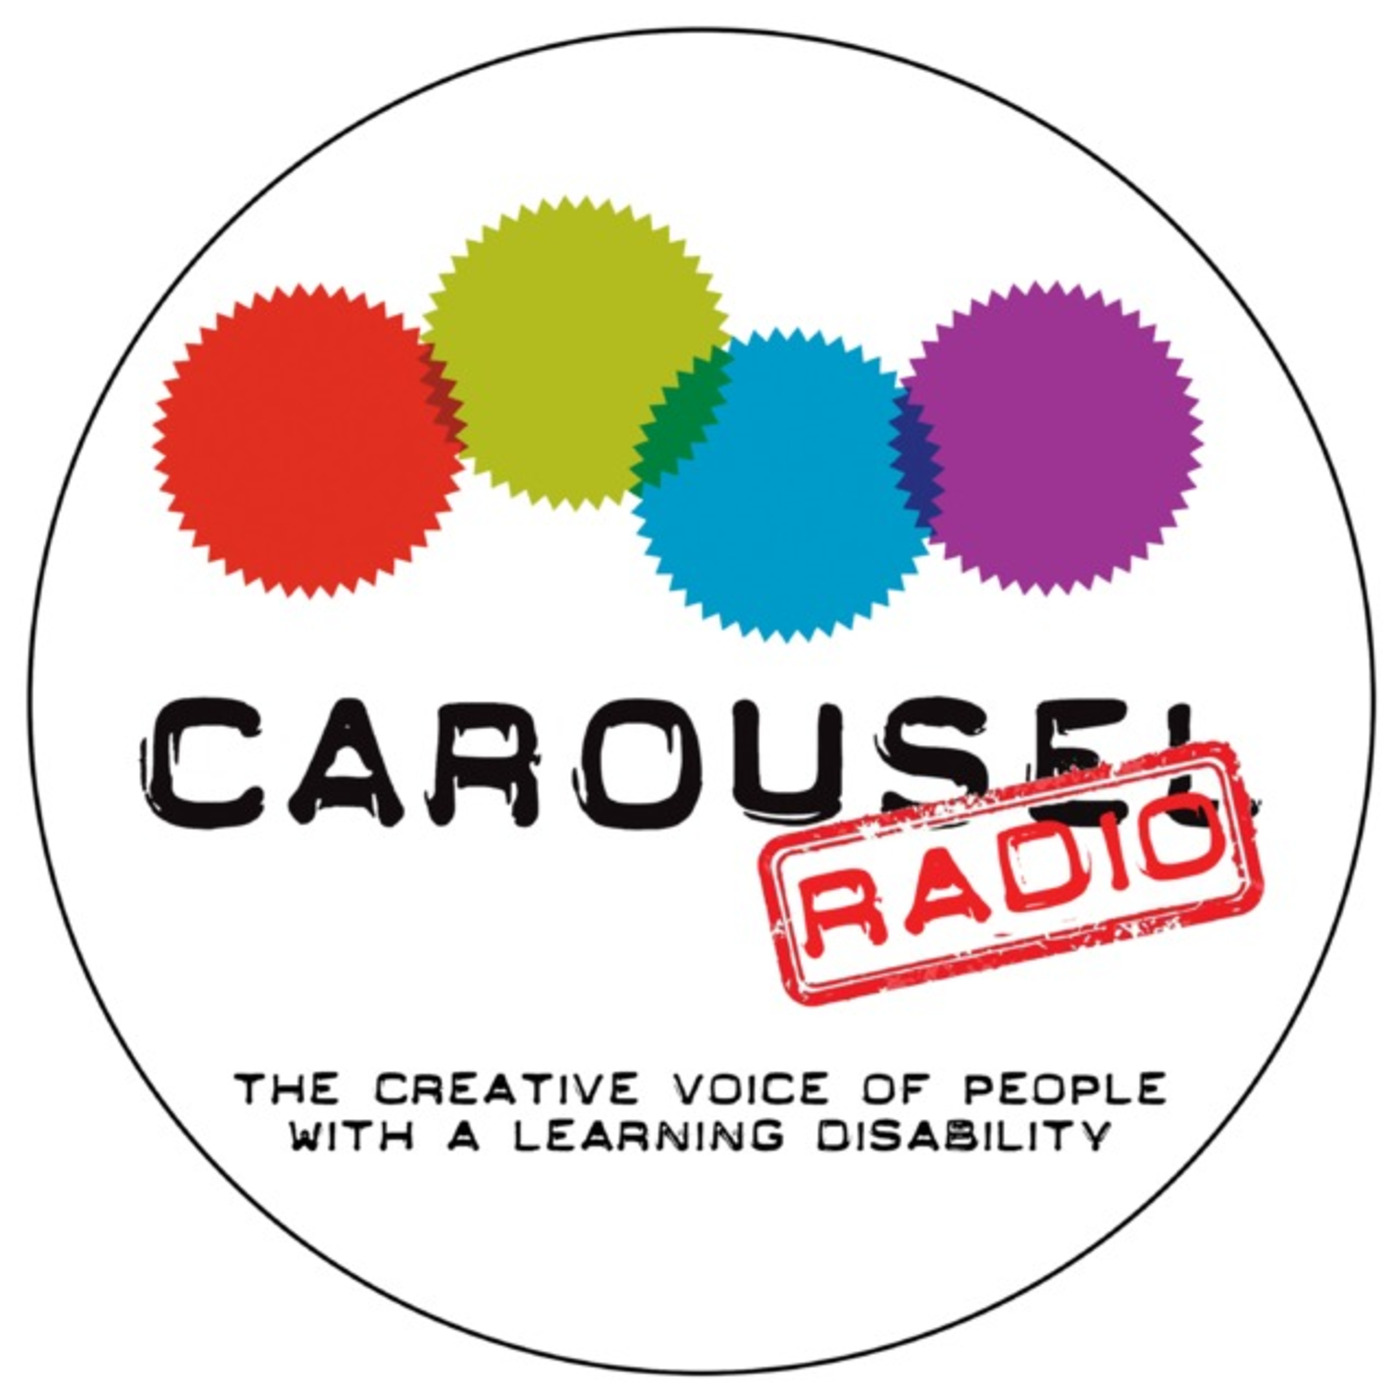 Episode 98: Carousel Radio January 2021